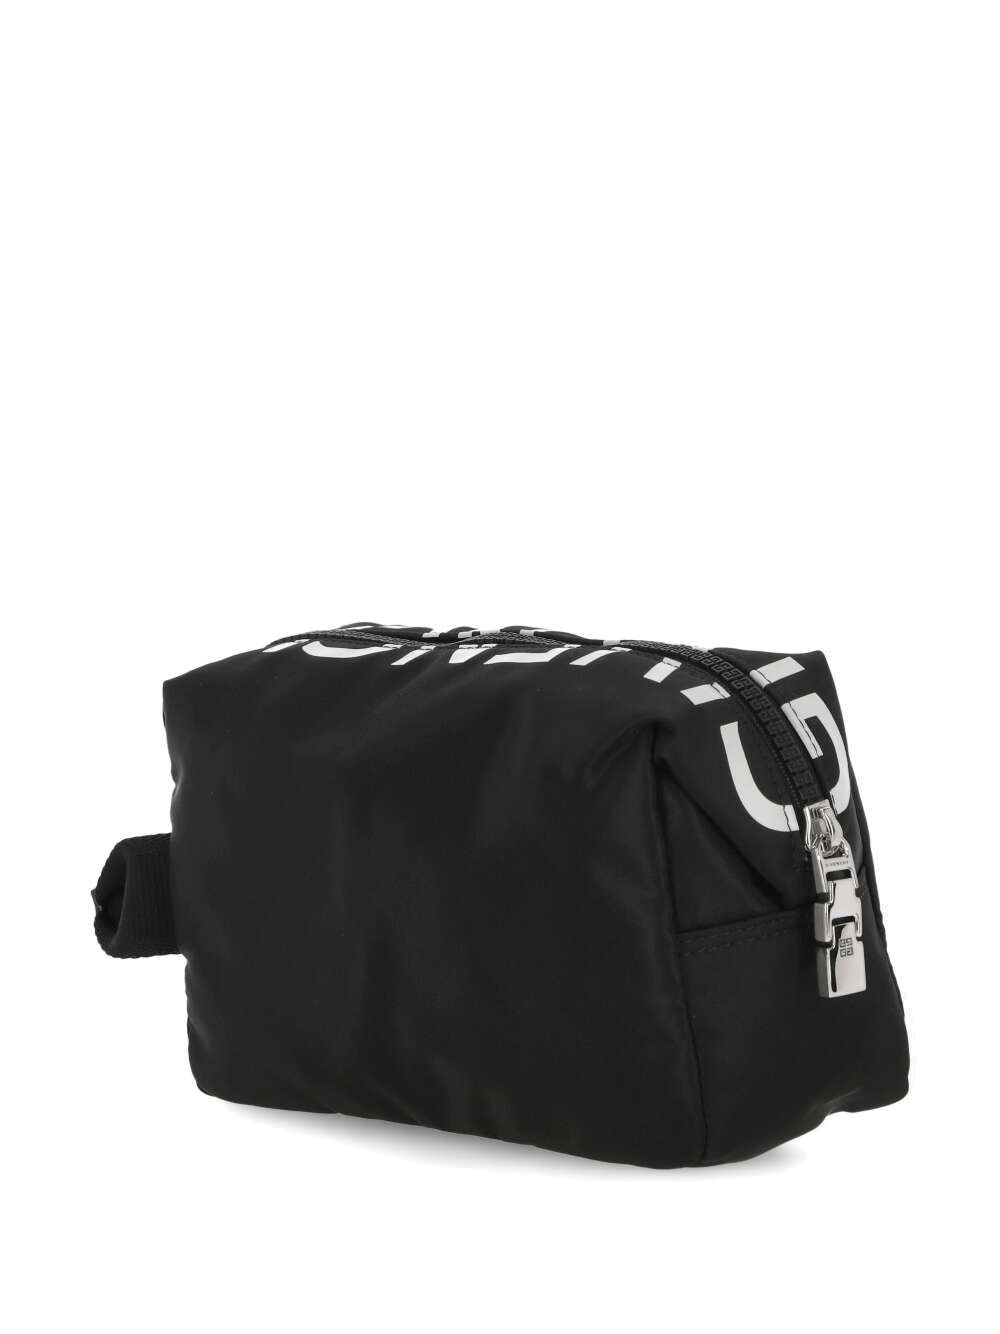 G-Zip Cosmetic Bag